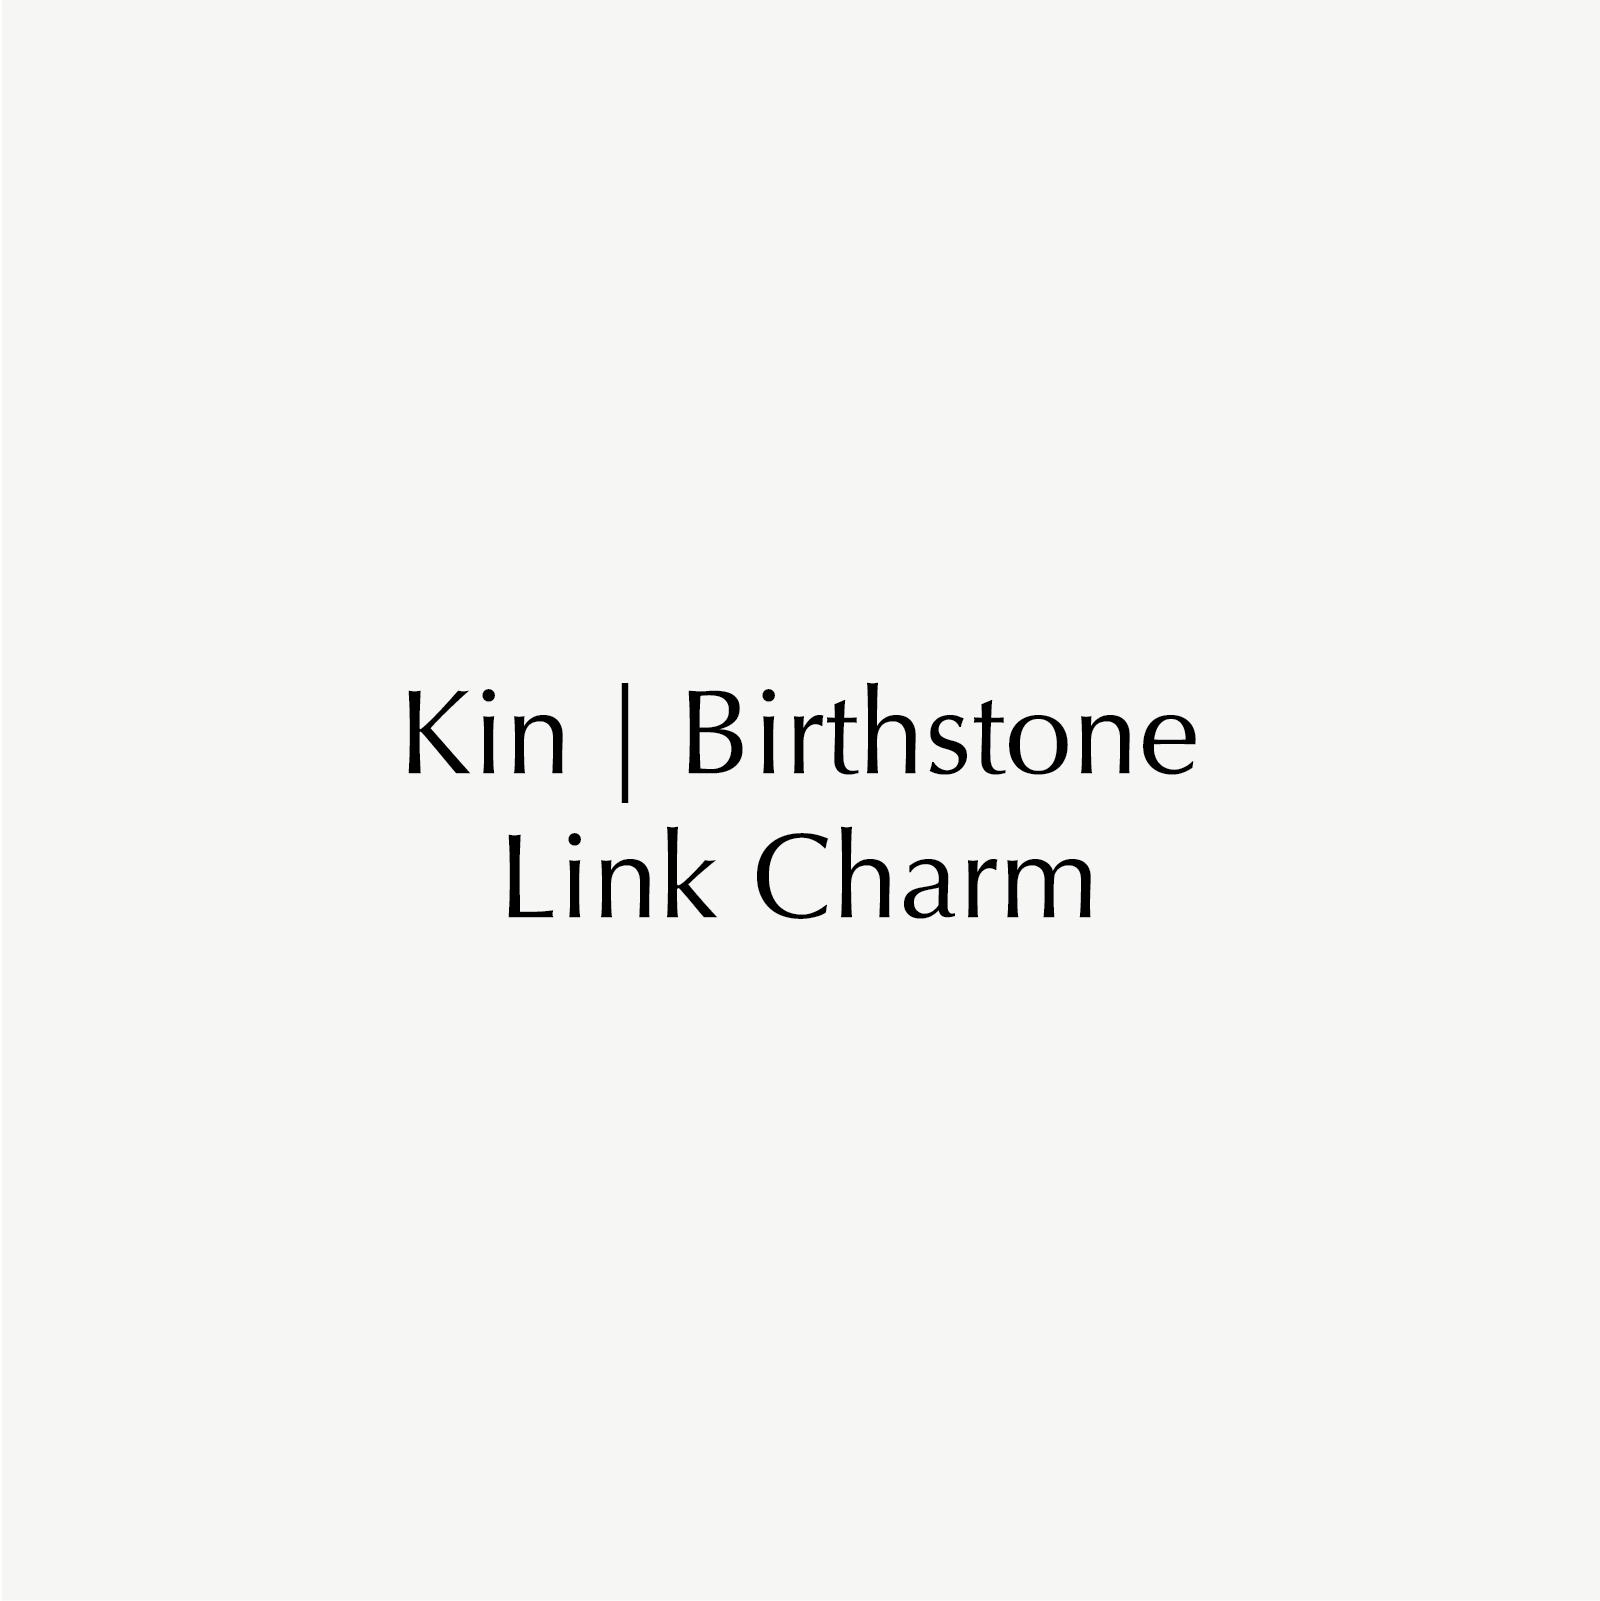 Kin | Birthstone Link Charm